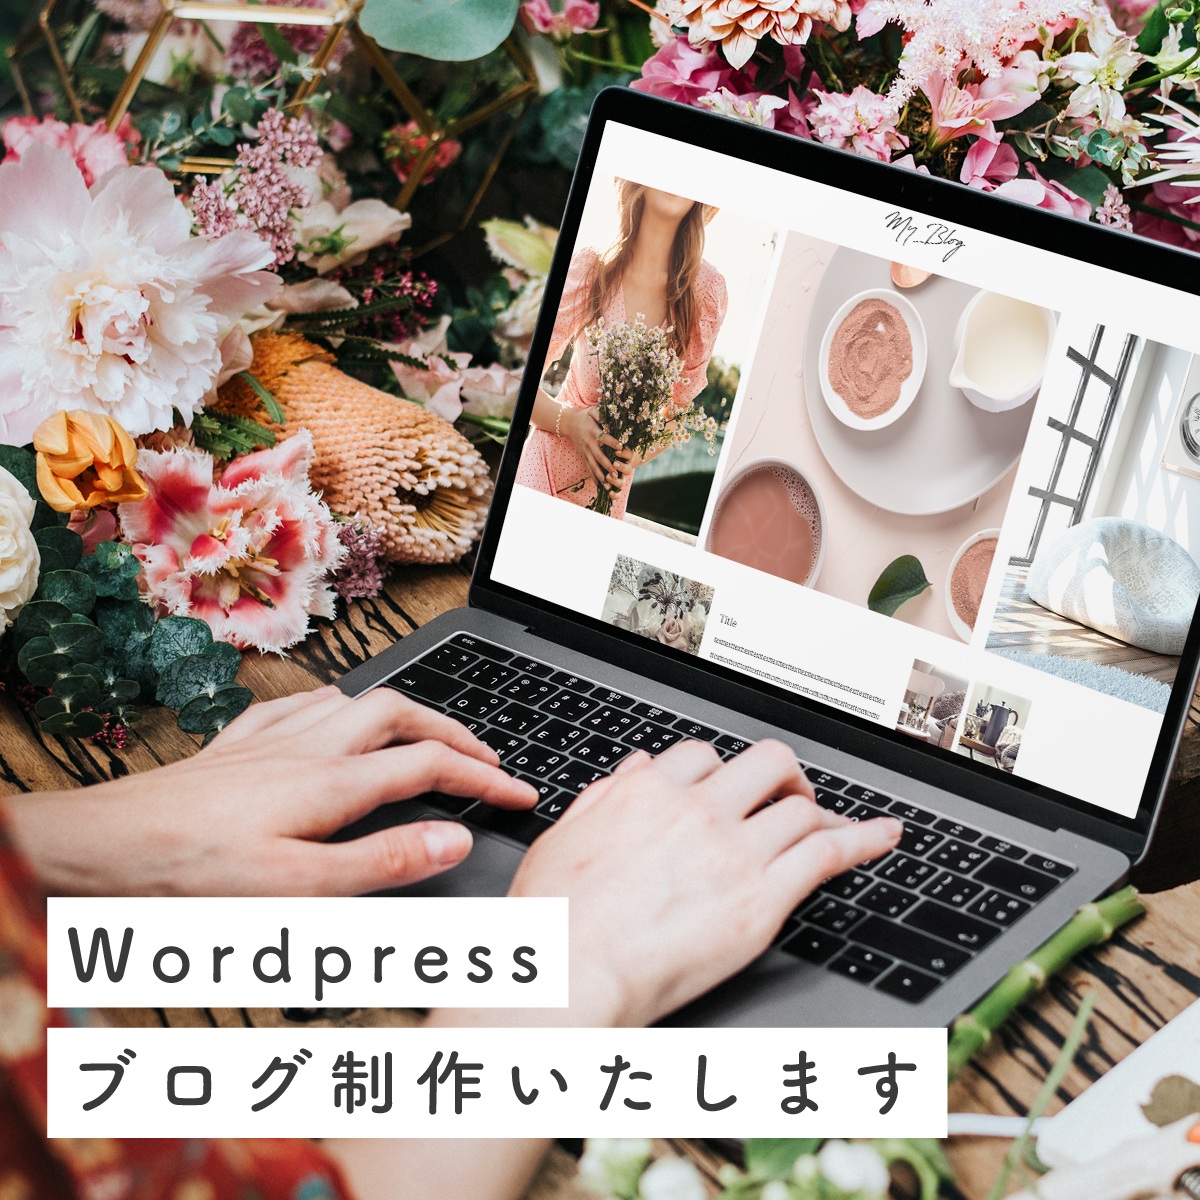 We will create a Wordpress blog